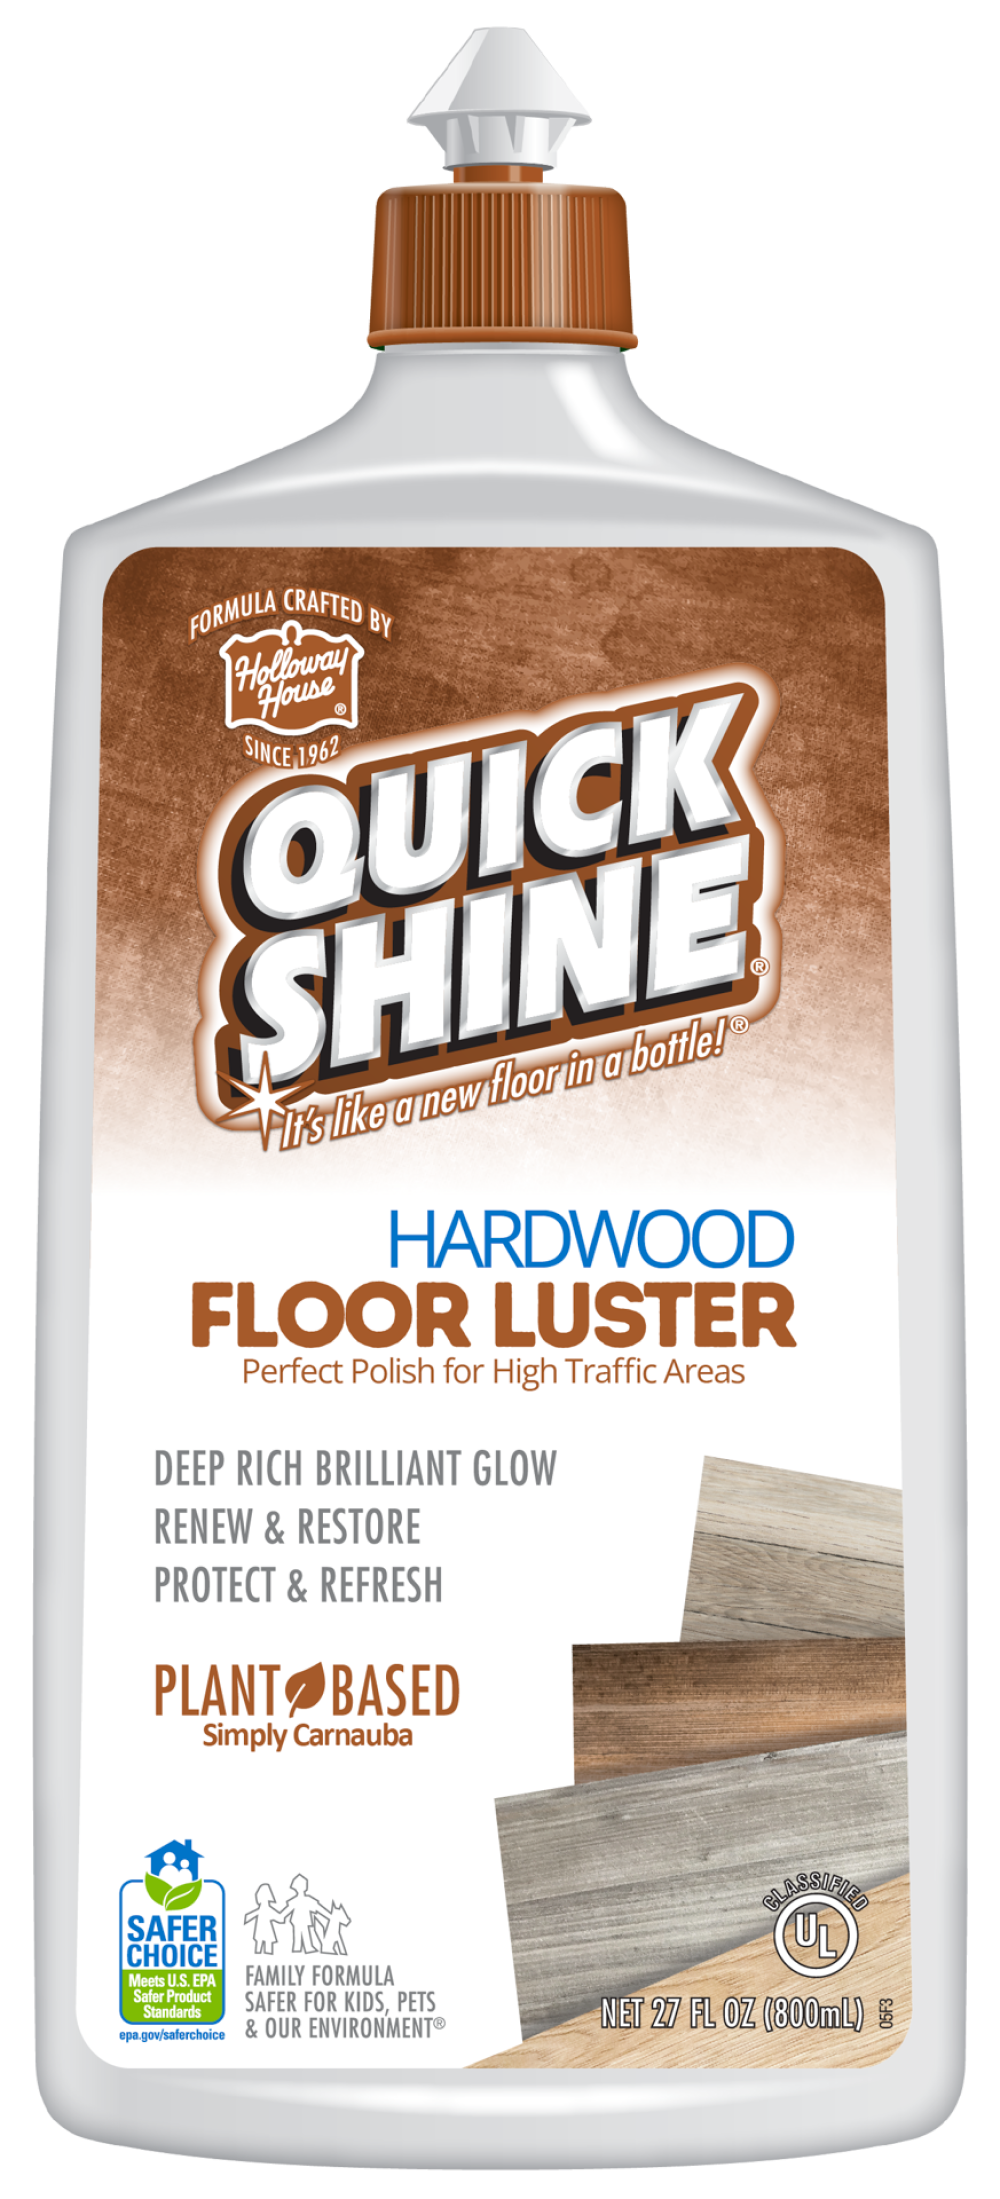 Orange GLO 24 oz. 4-In-1 Hardwood Floor Cleaner and Polish (6-Pack